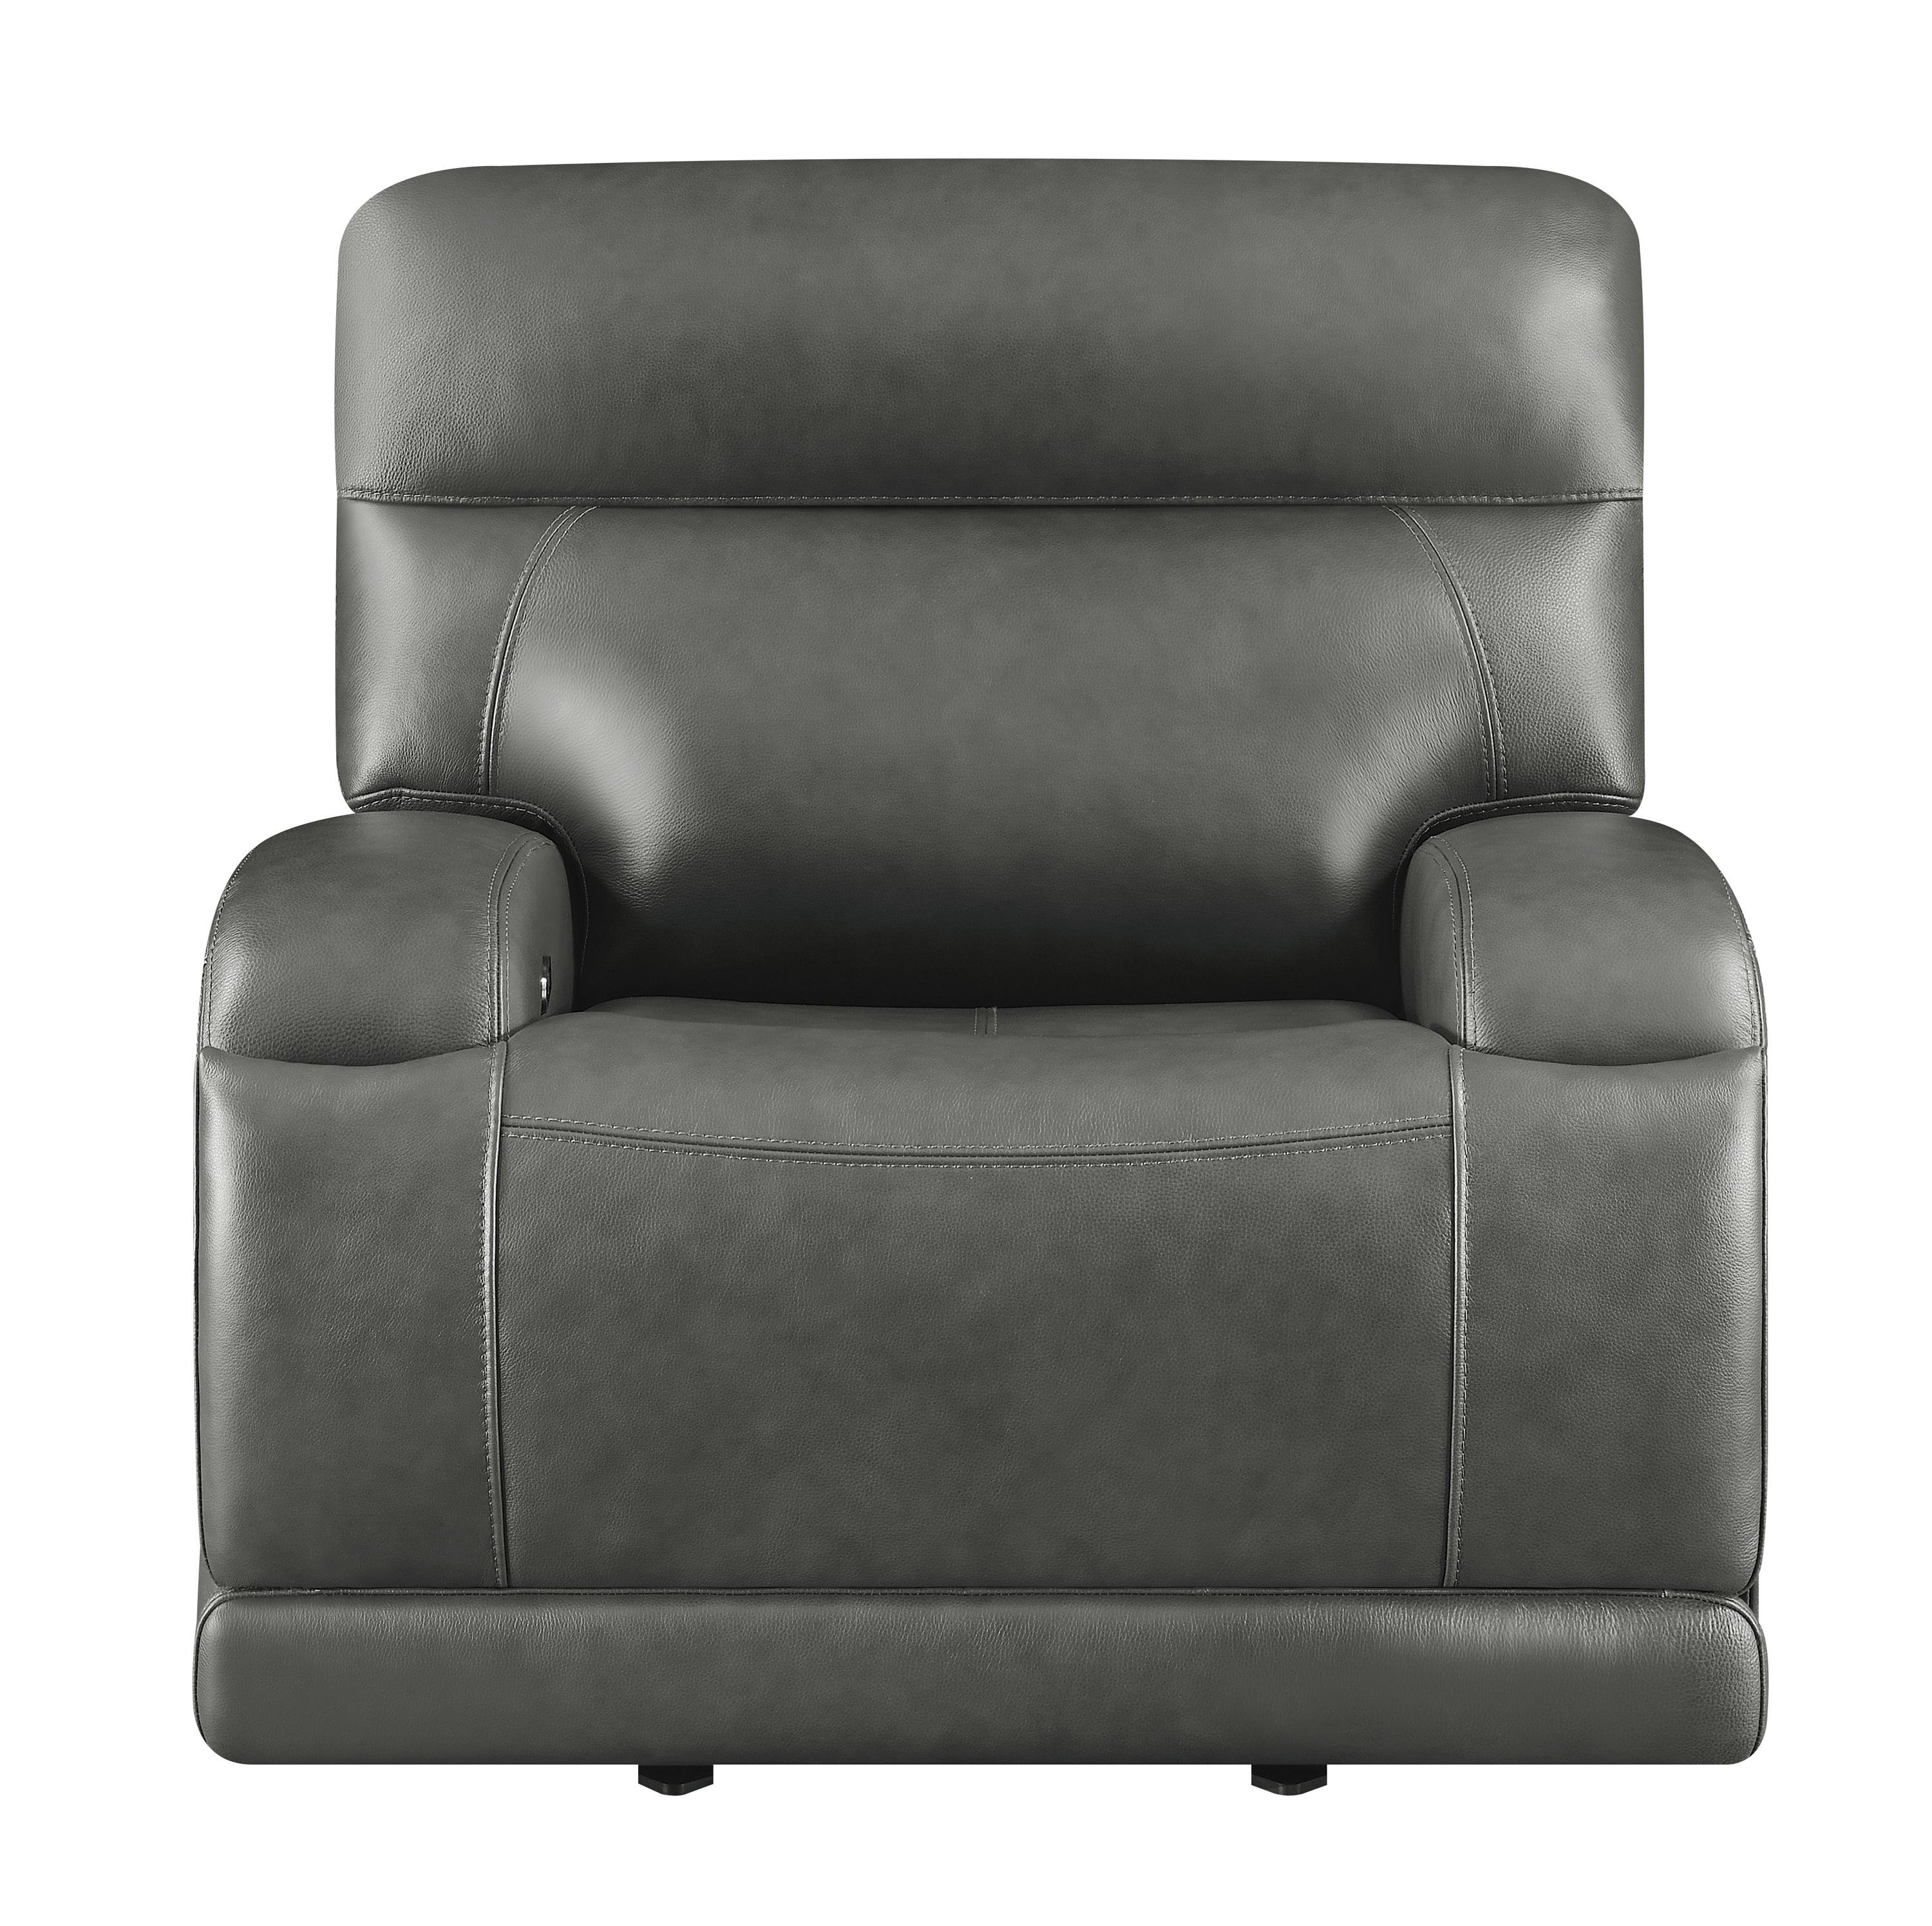 Modern Power recliner 610486P Longport 610486P in Charcoal Top grain leather